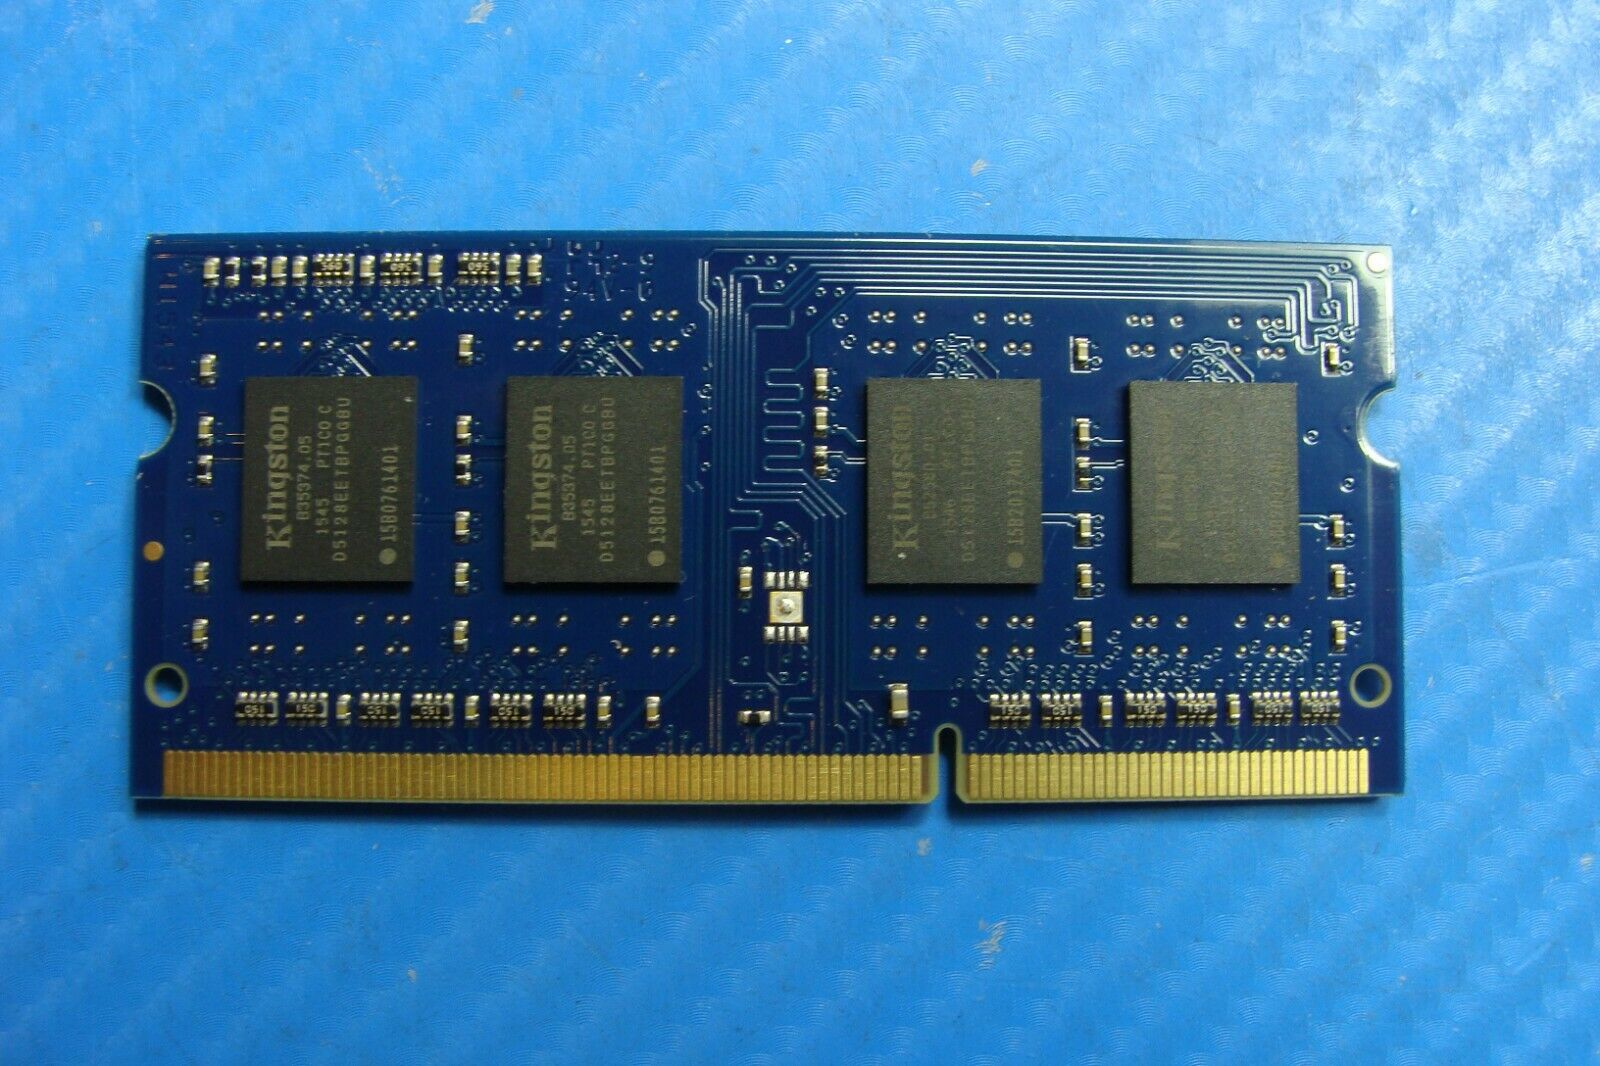 Dell Inspiron 15 3558 Kingston 4Gb RAM Memory pc3l-12800s SO-DIMM knwmx1-etbs1 